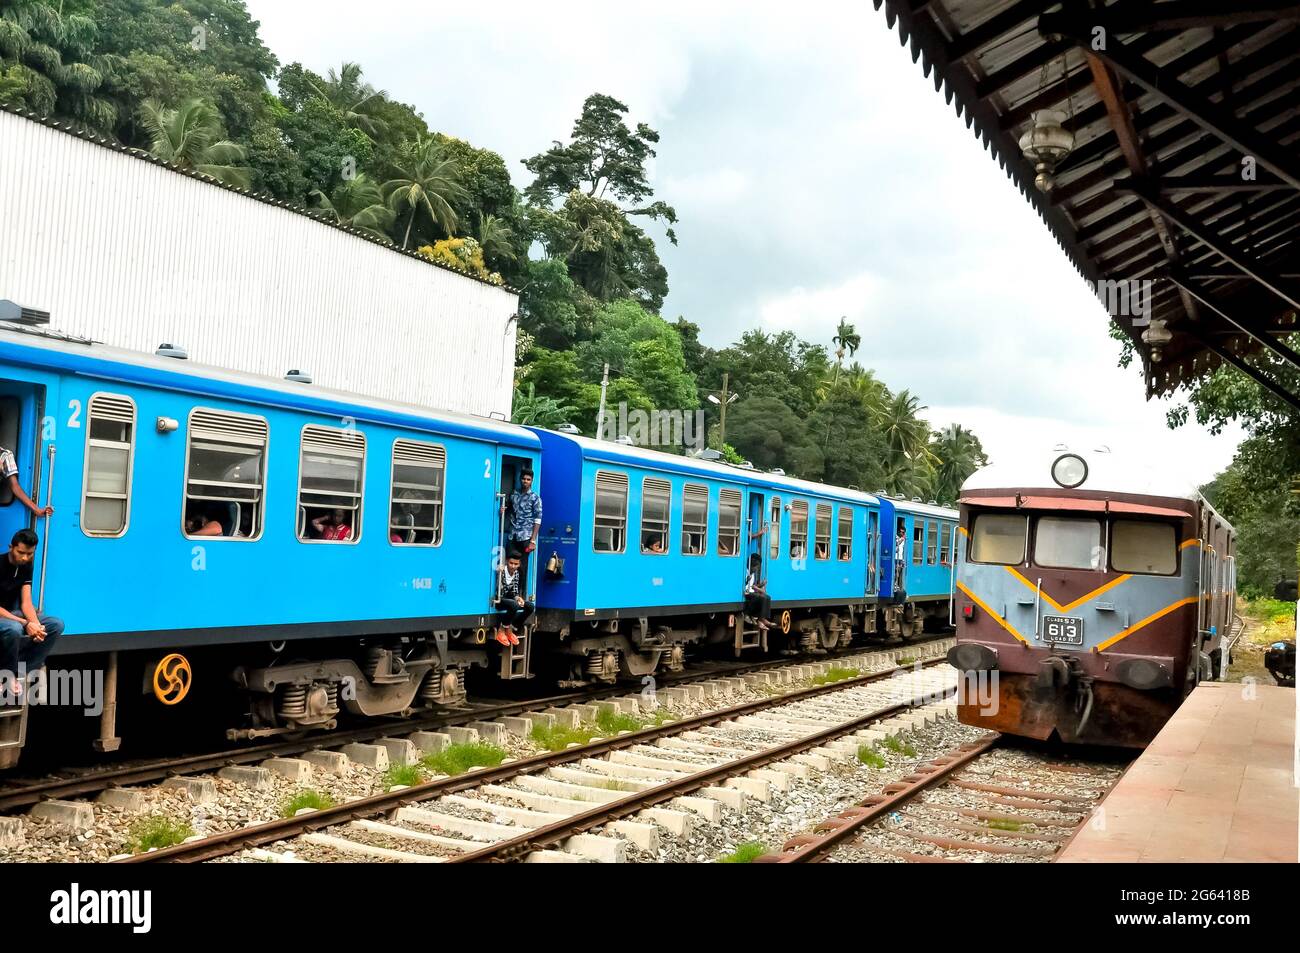 National Railway Museum ist das National Railway Museum von Sri Lanka, in Kadugannawa. Das Eisenbahnmuseum ist im Besitz der Sri Lanka Railways. Stockfoto